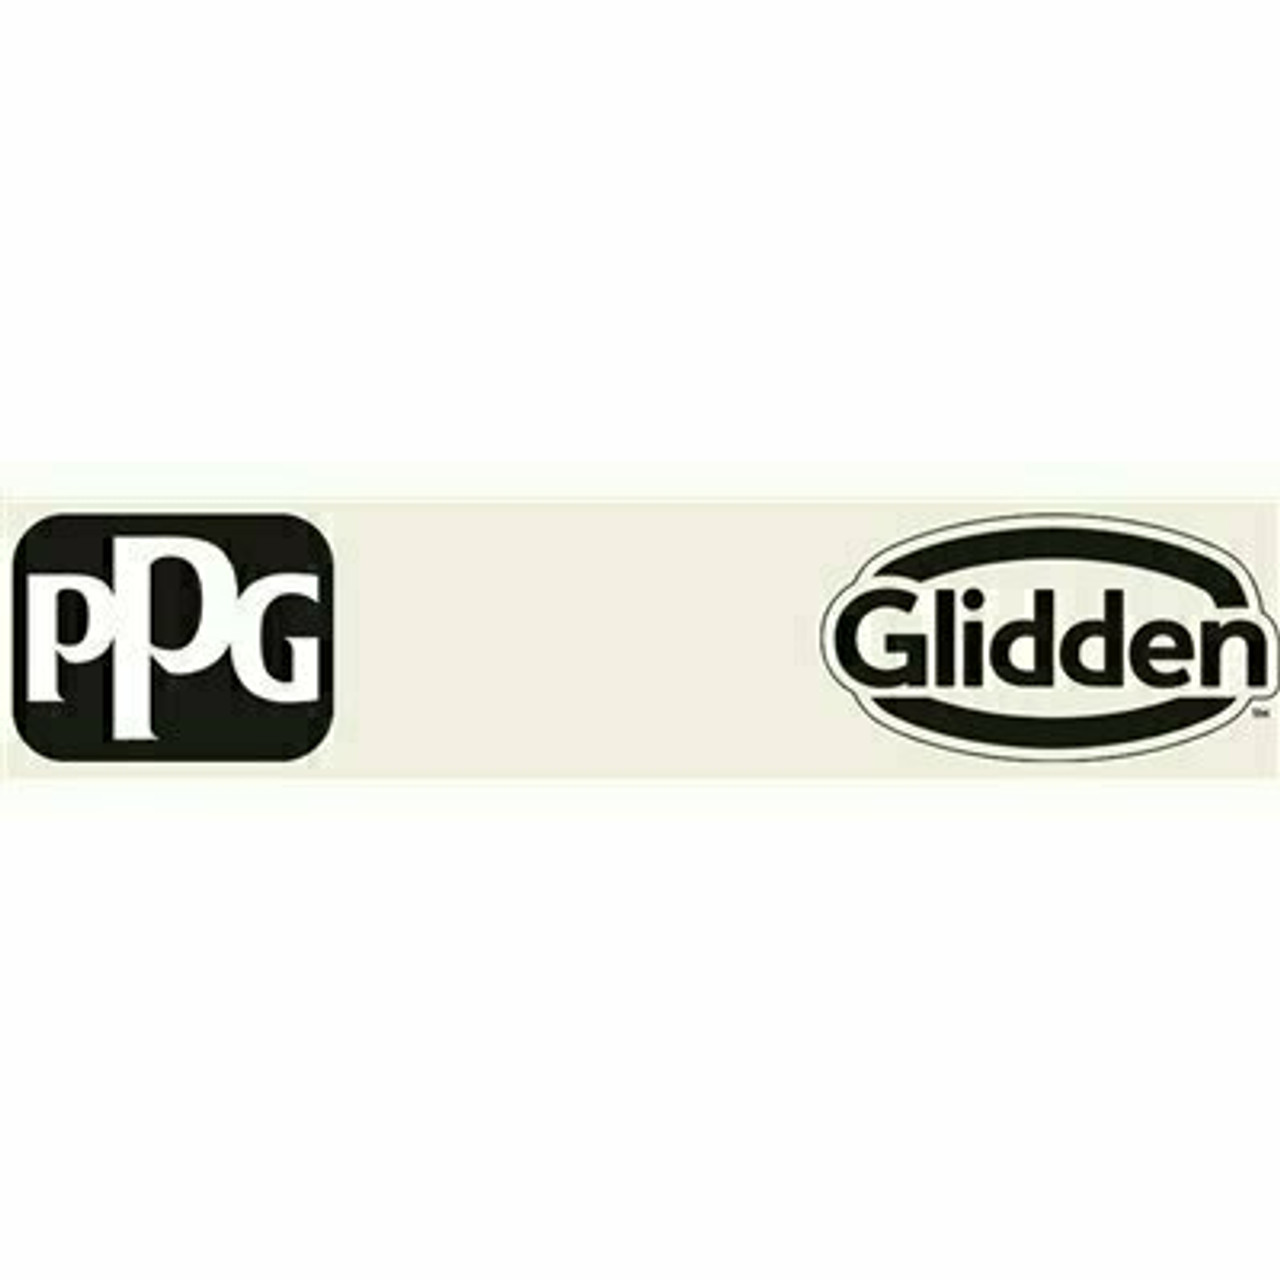 Glidden Diamond 1 Gal. #Ppg1006-1 Gypsum Semi-Gloss Exterior Paint